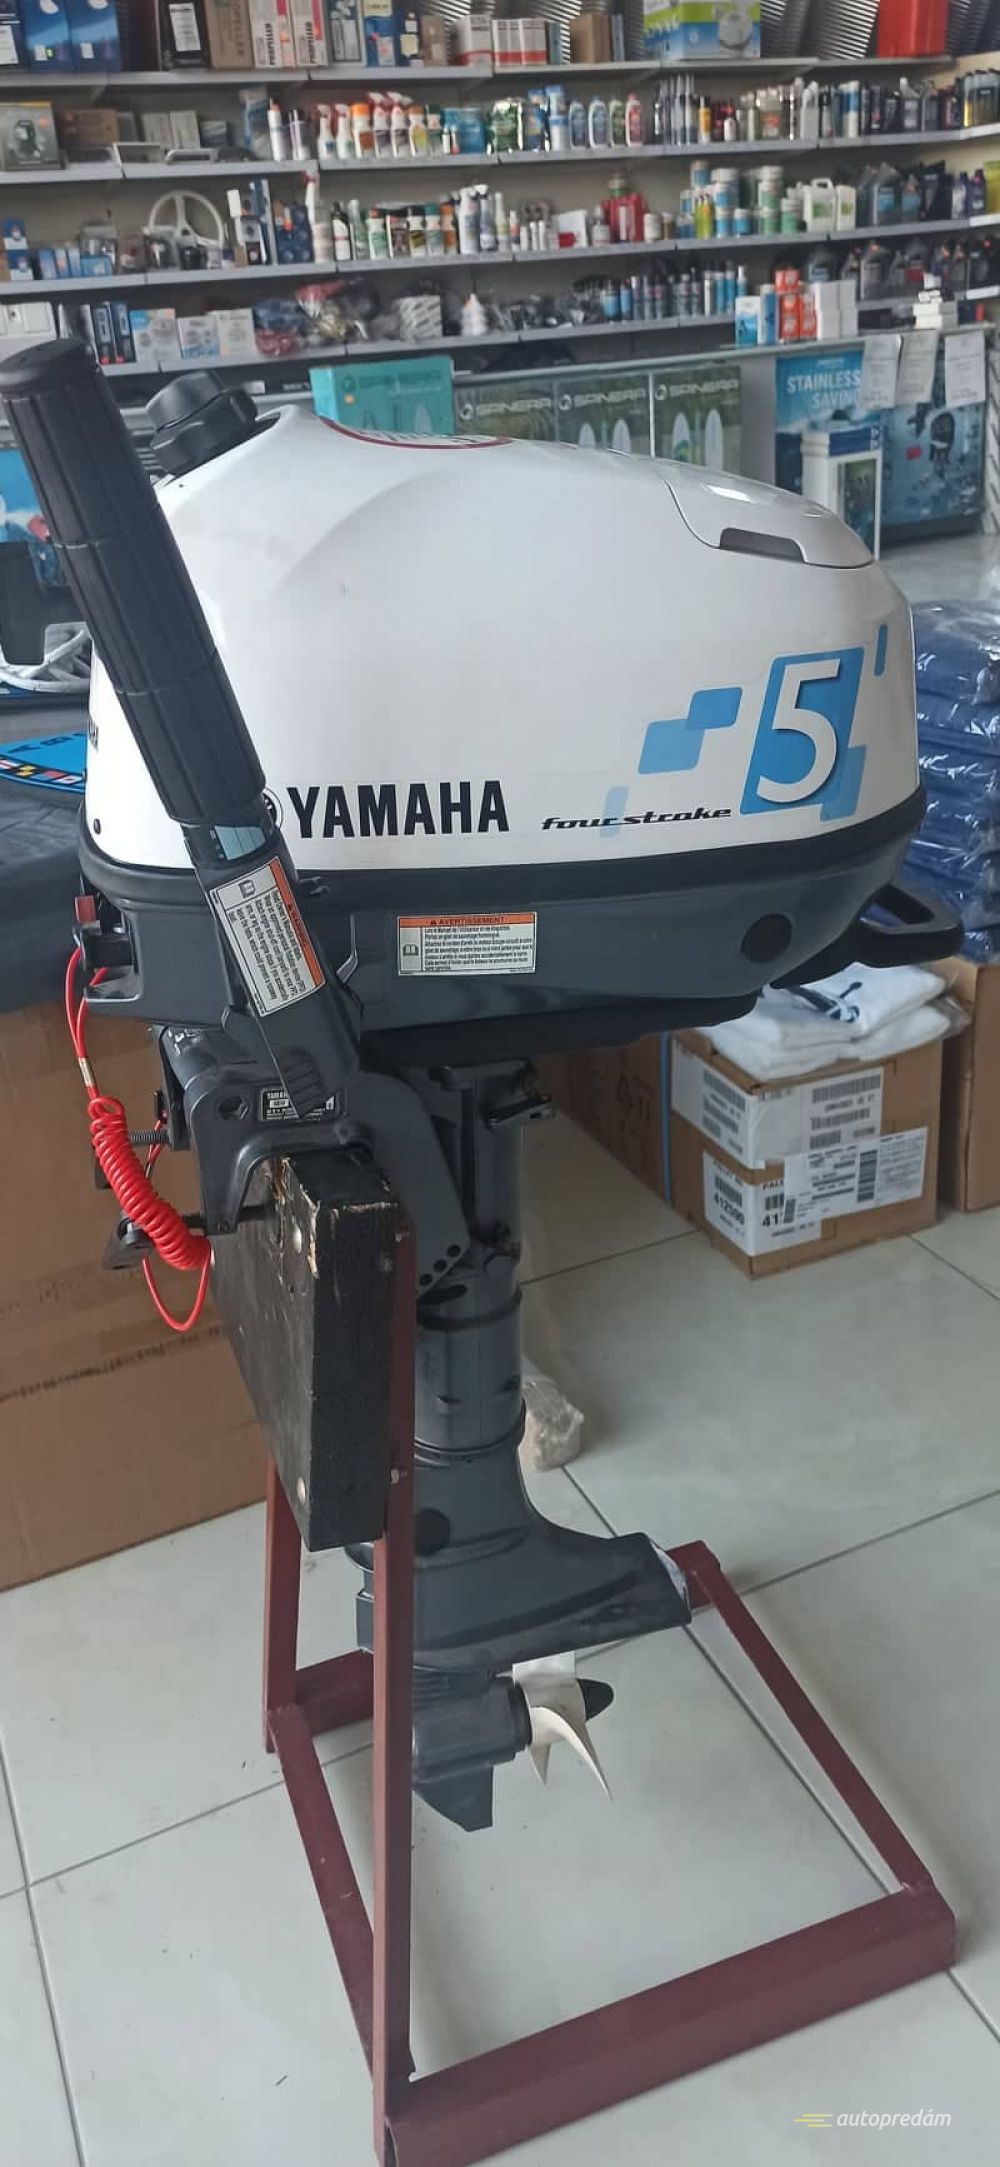 Lodný motor YAMAHA F5 AMHS -r.v. 2013